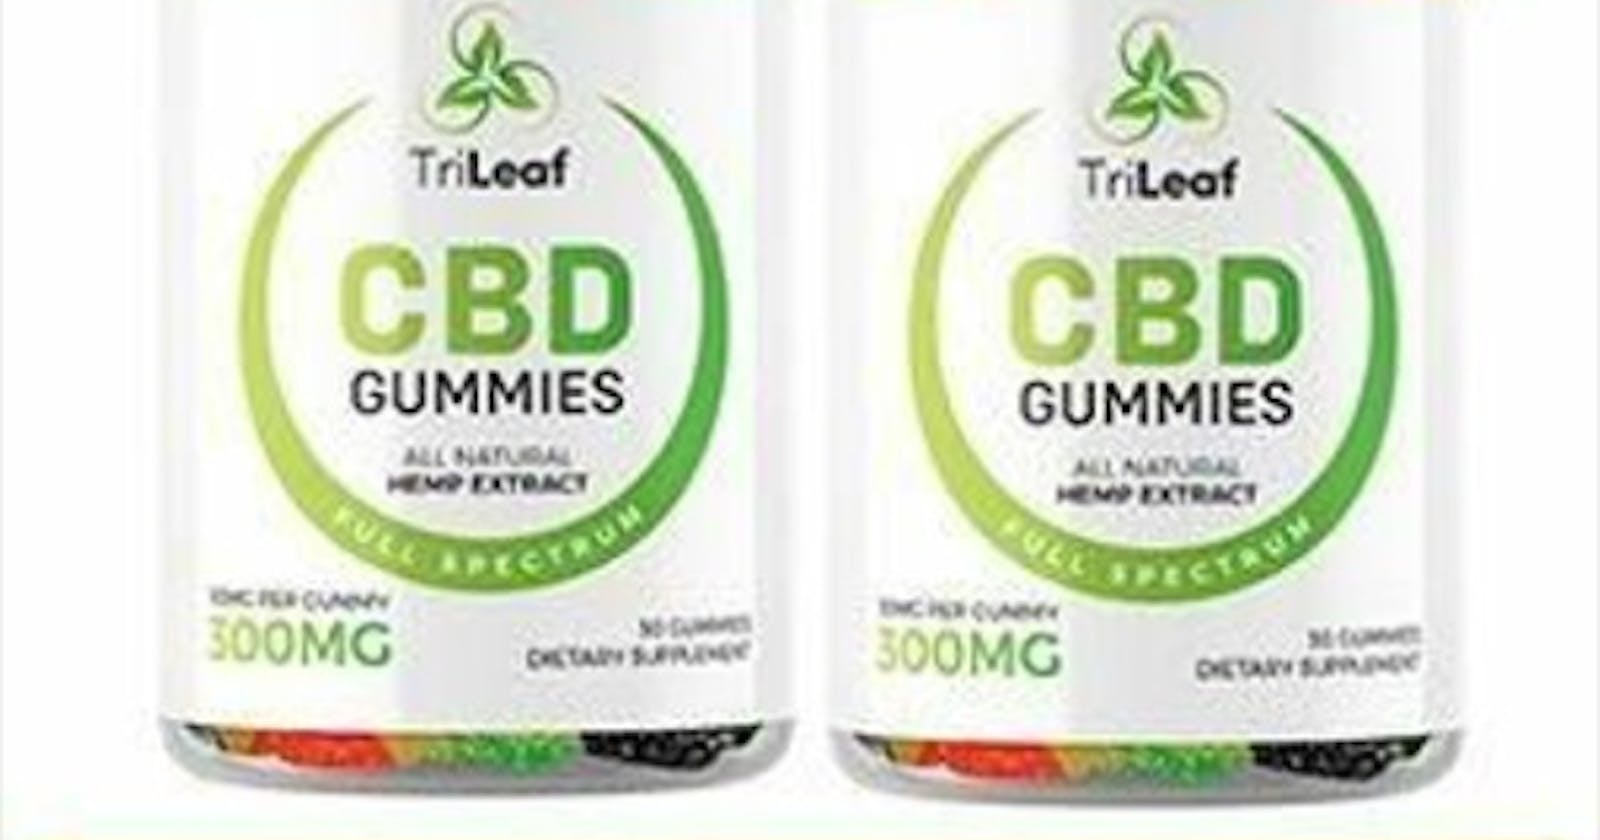 Trileaf CBD Gummies Reviews Ingredients Amazing Results!